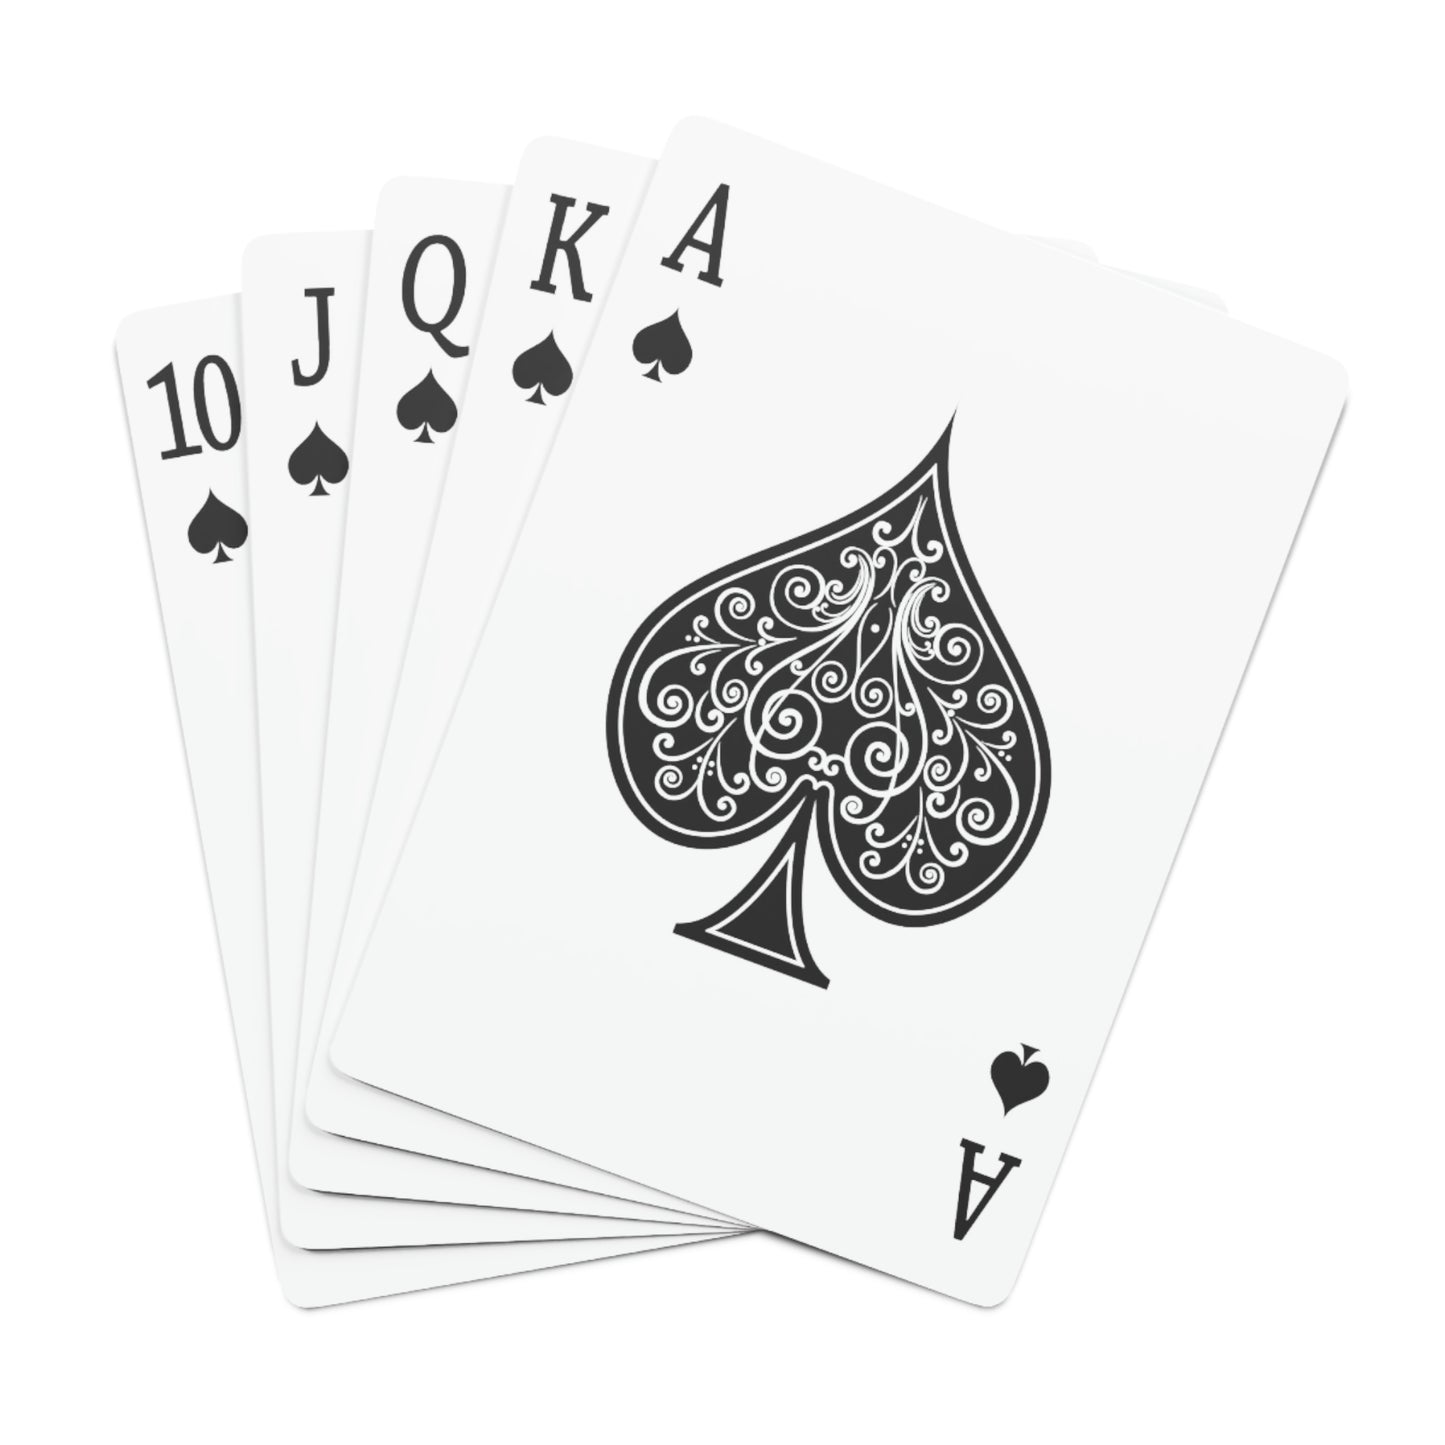 Custom Poker Cards “#BestLifeEver - PT”